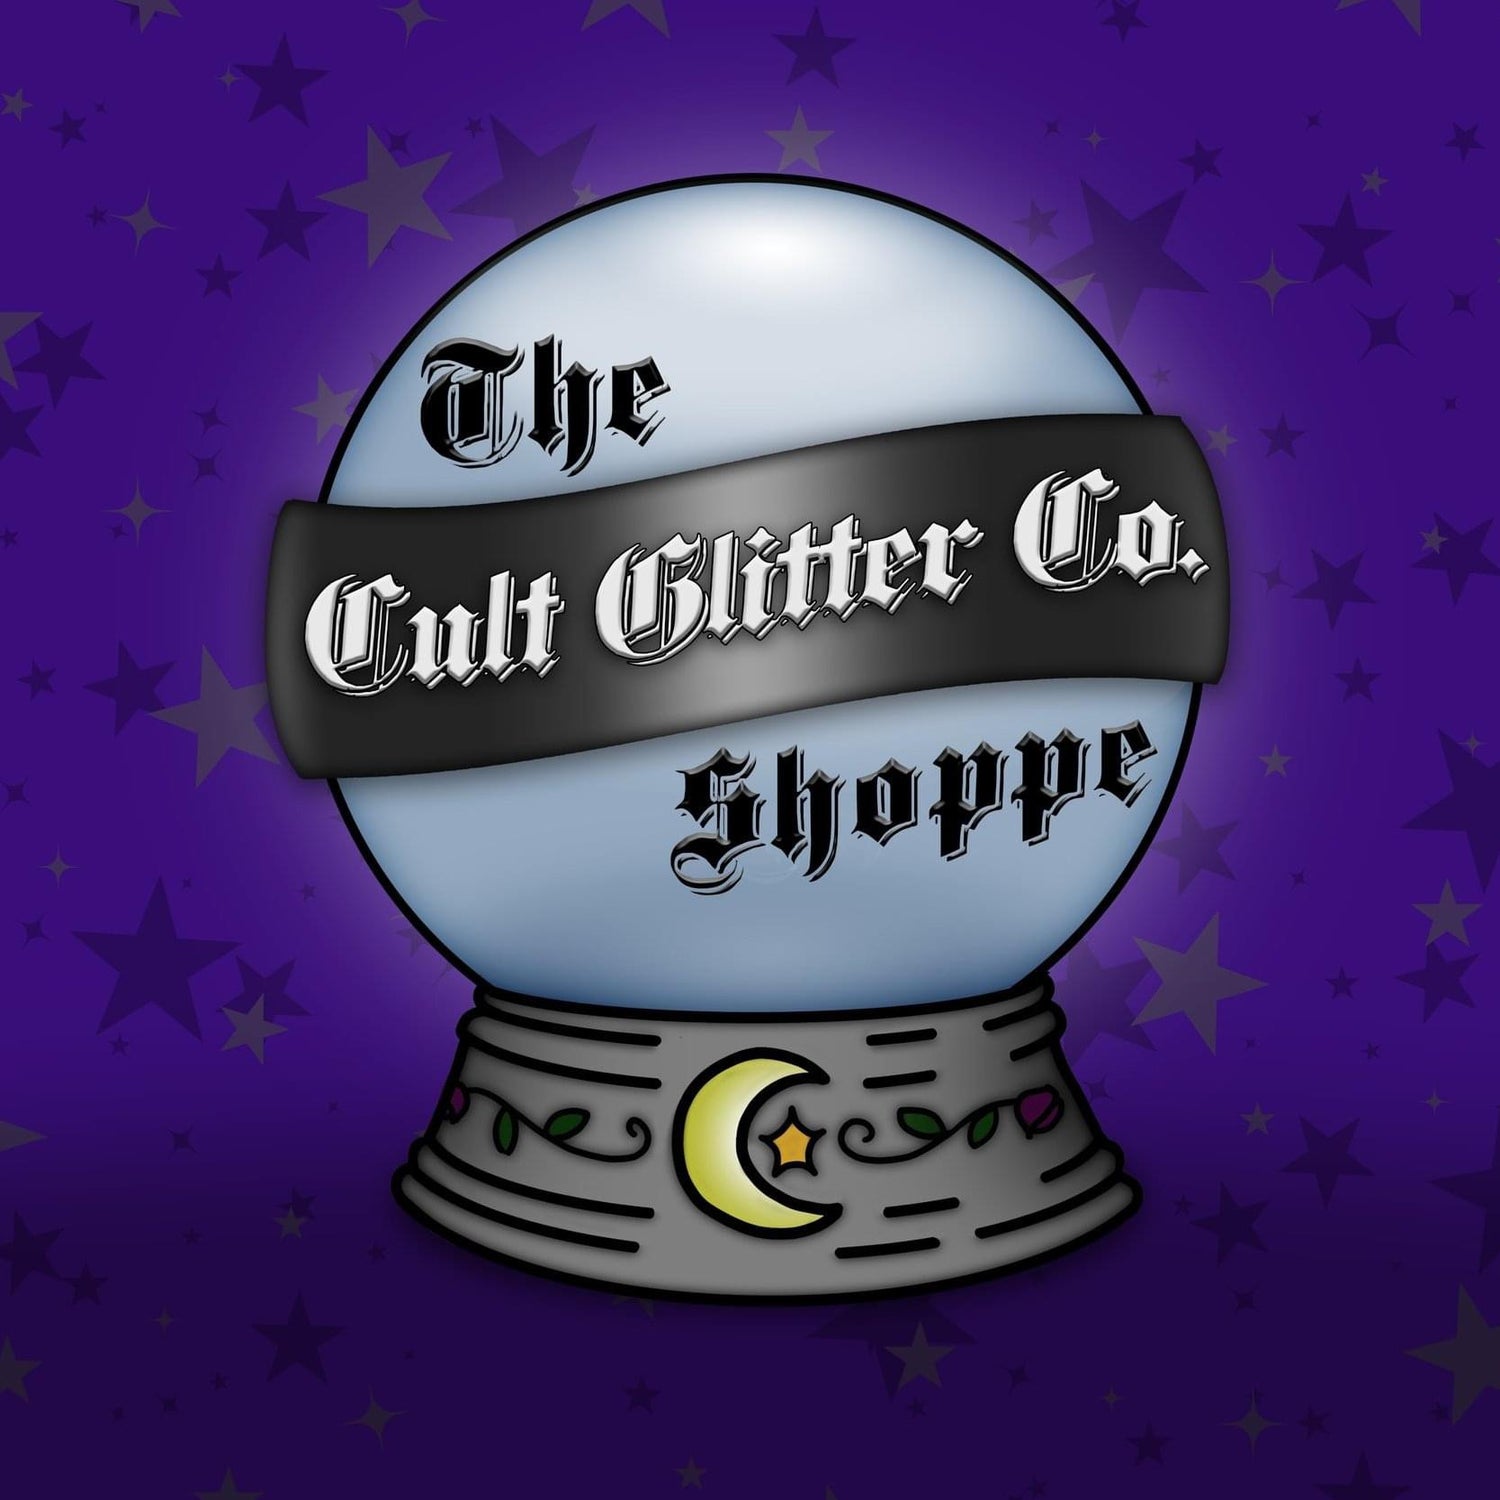 Cult Glitter Co